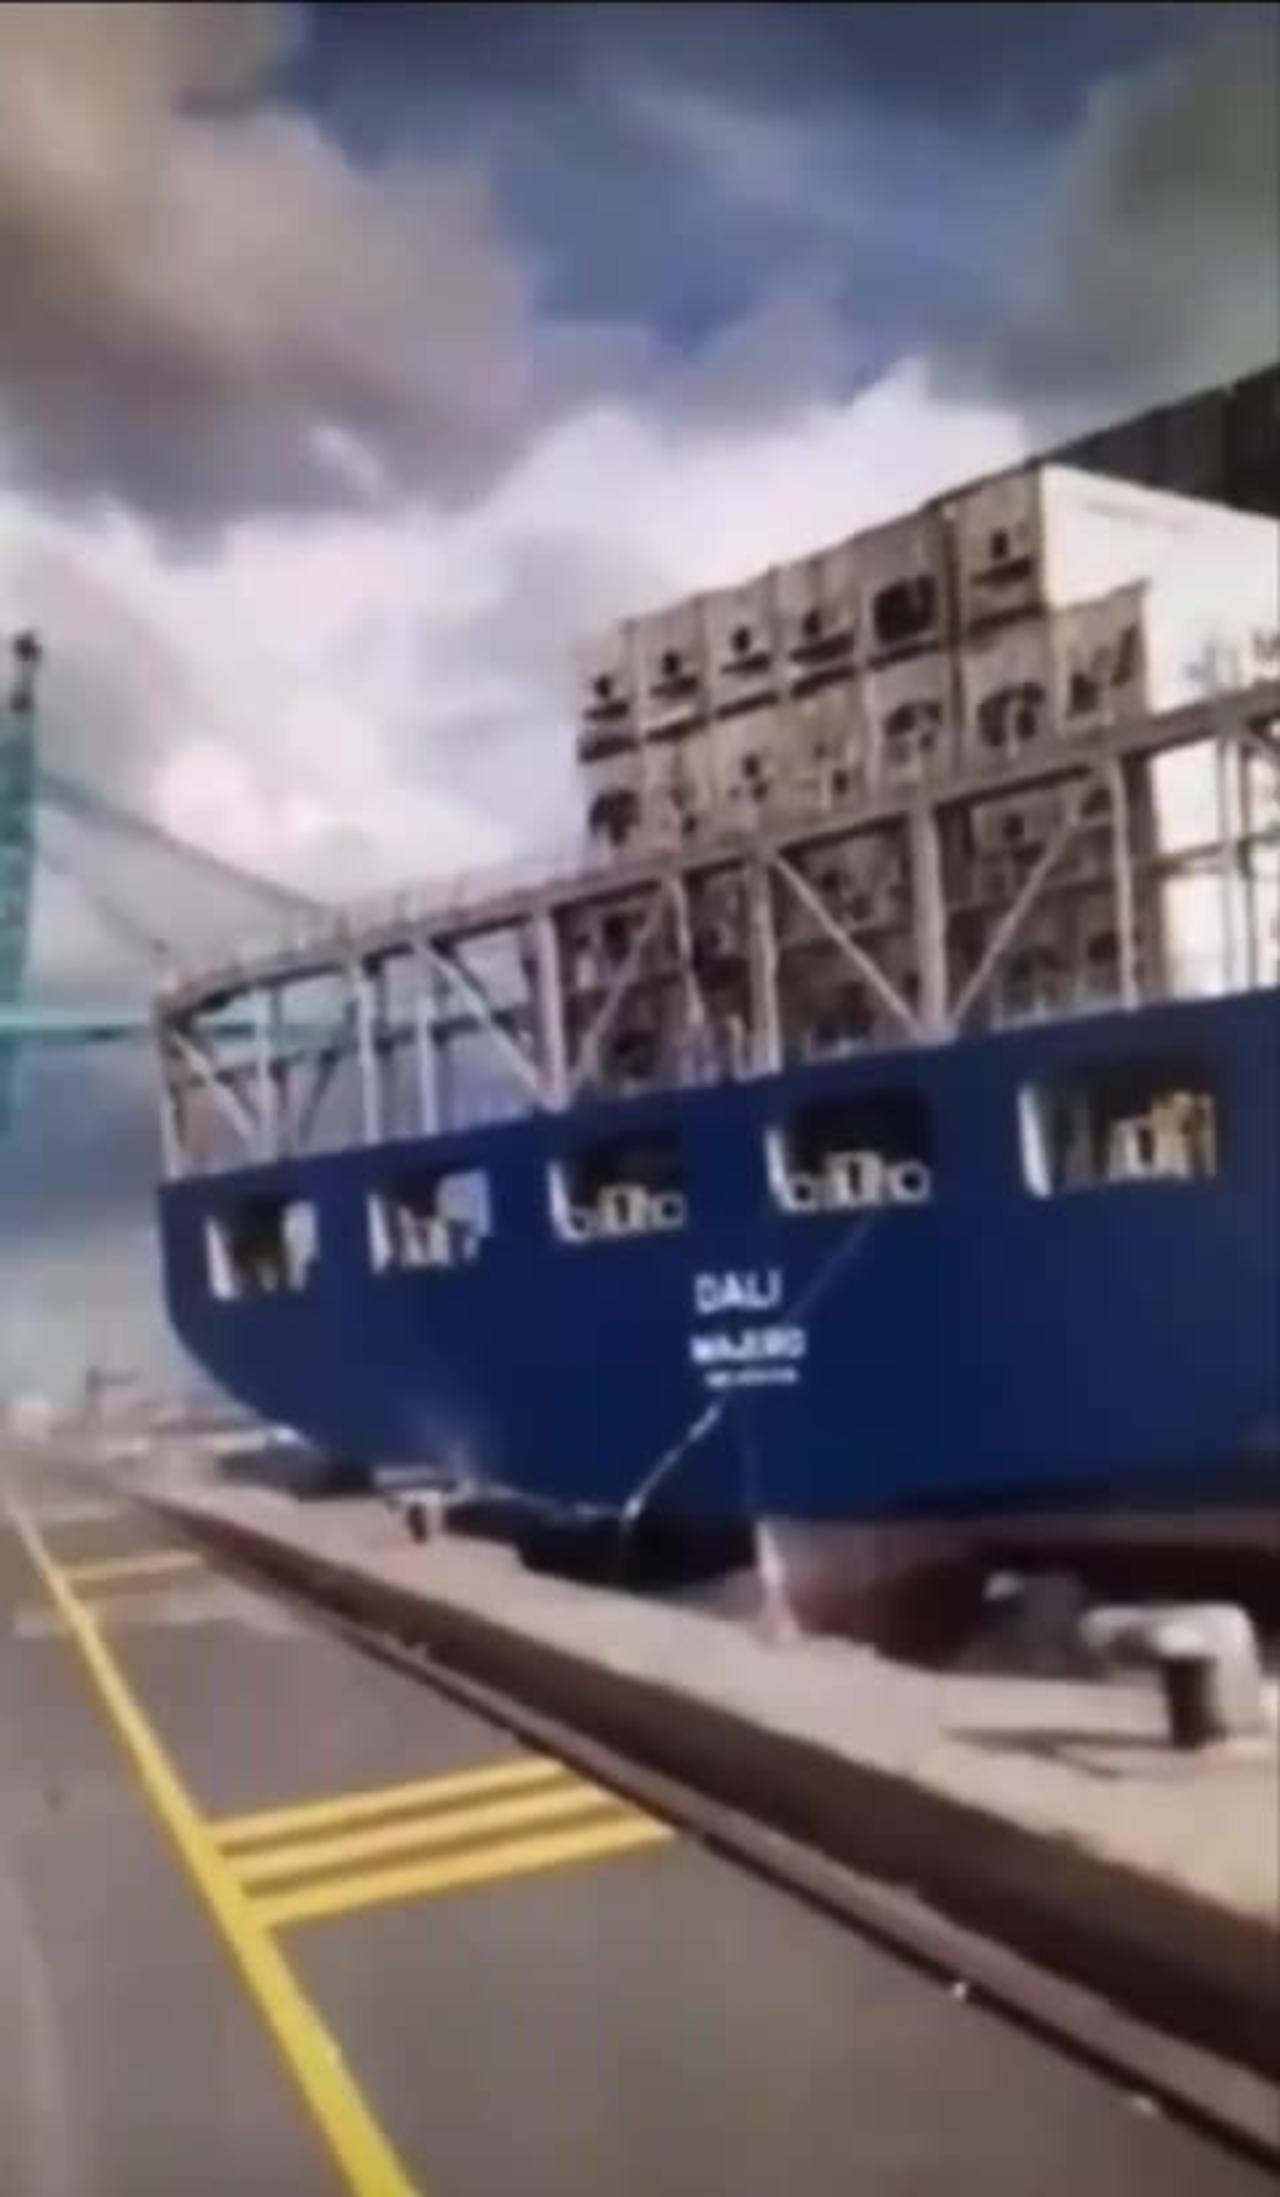 Dali container ship that crashed into Baltimore's Key Bridge bringing it crumbling